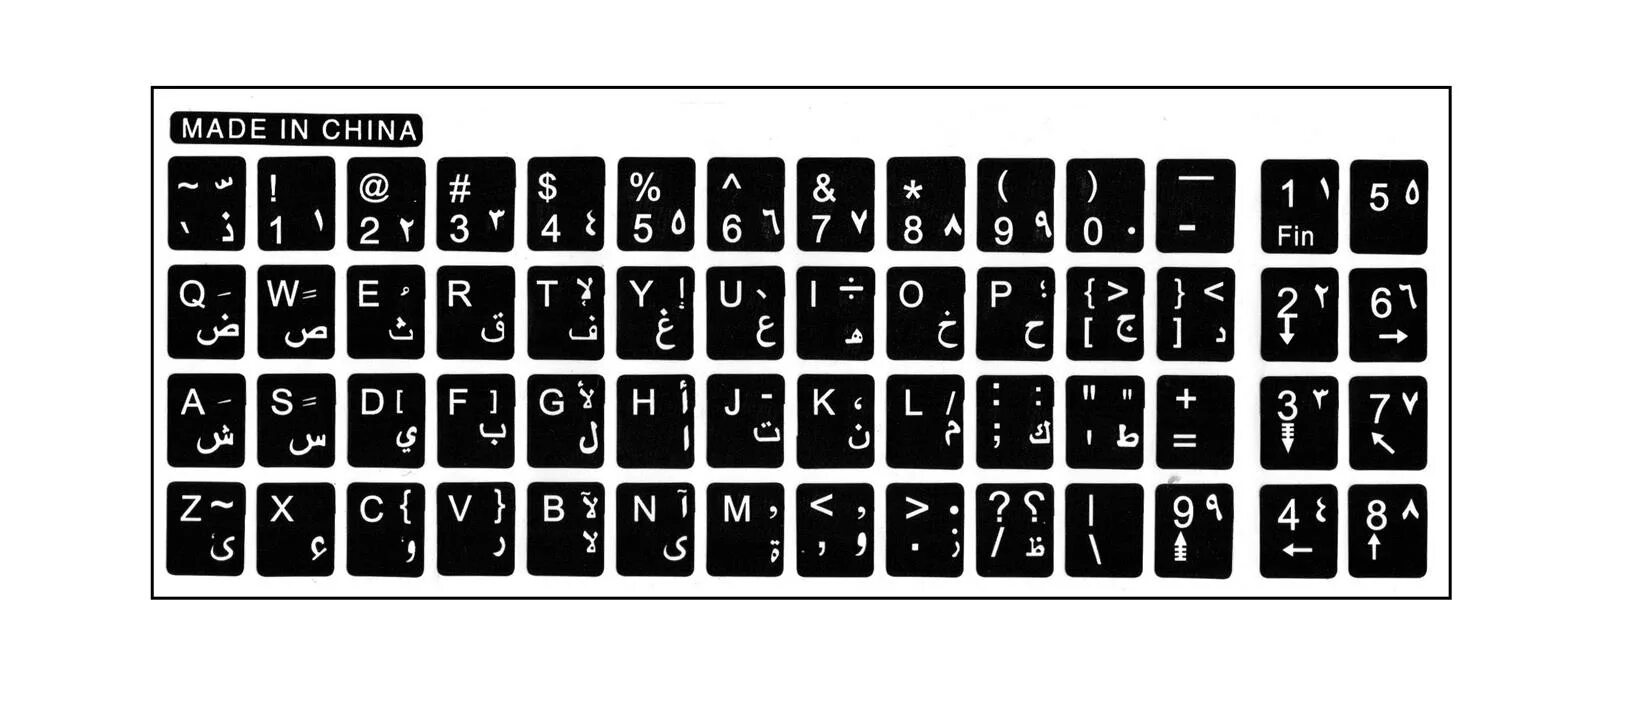 Наклейки на клавиатуру арабский. Наклейка на арабскую клавиатуру для ноутбука. Наклейки на клавиатуру с арабскими буквами. Арабская клавиатура на ноутбуке.